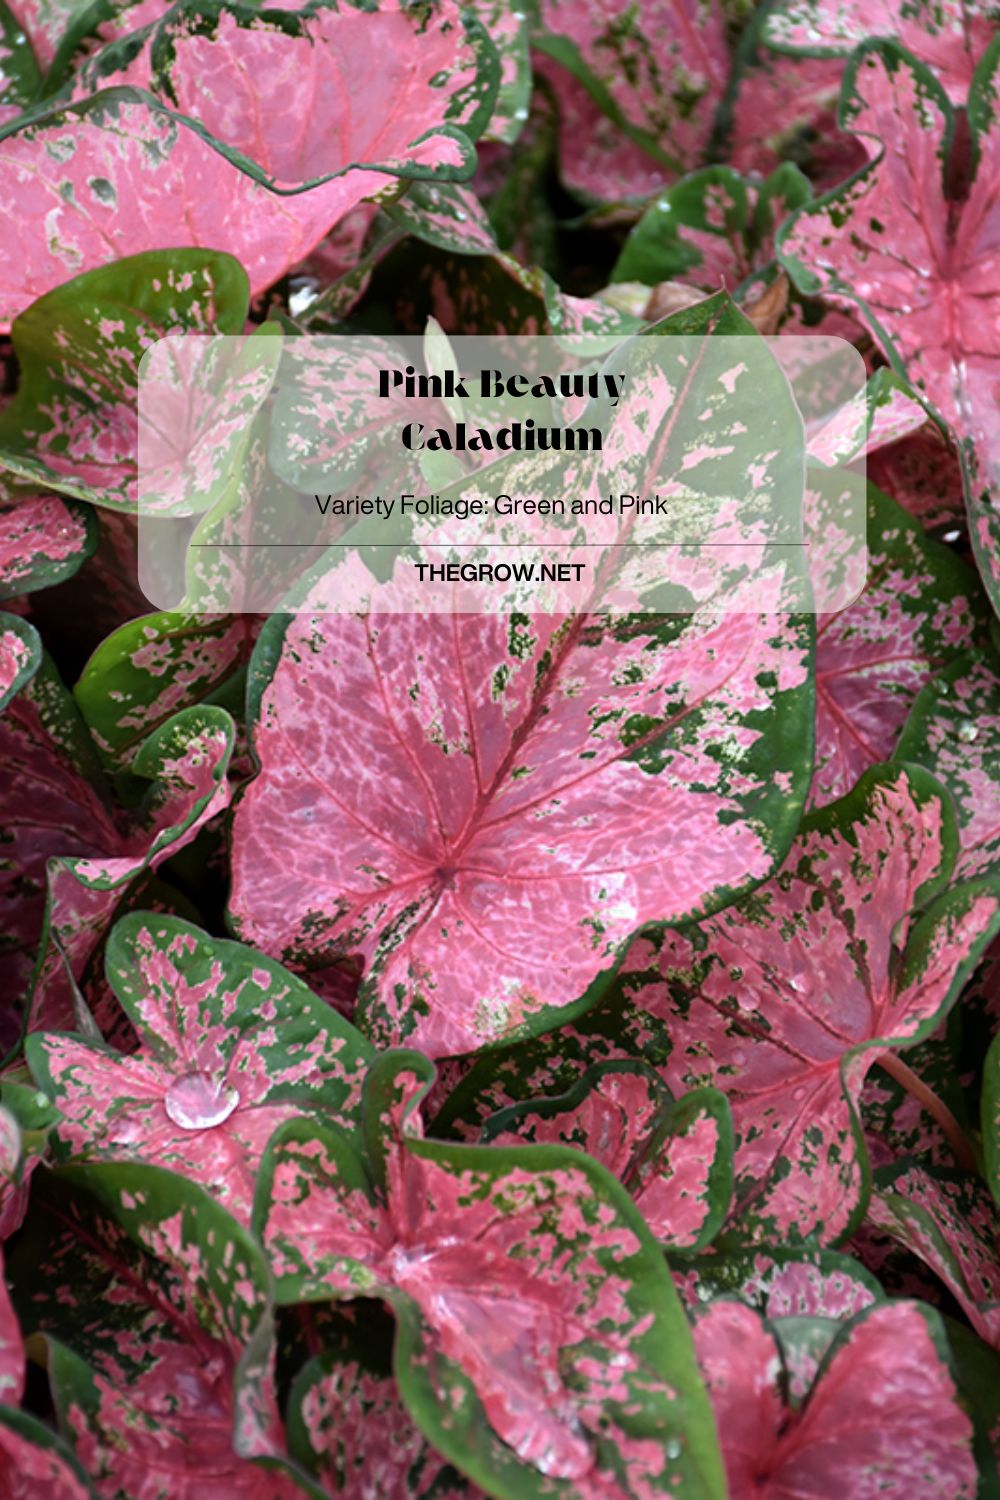 Pink Beauty Caladium